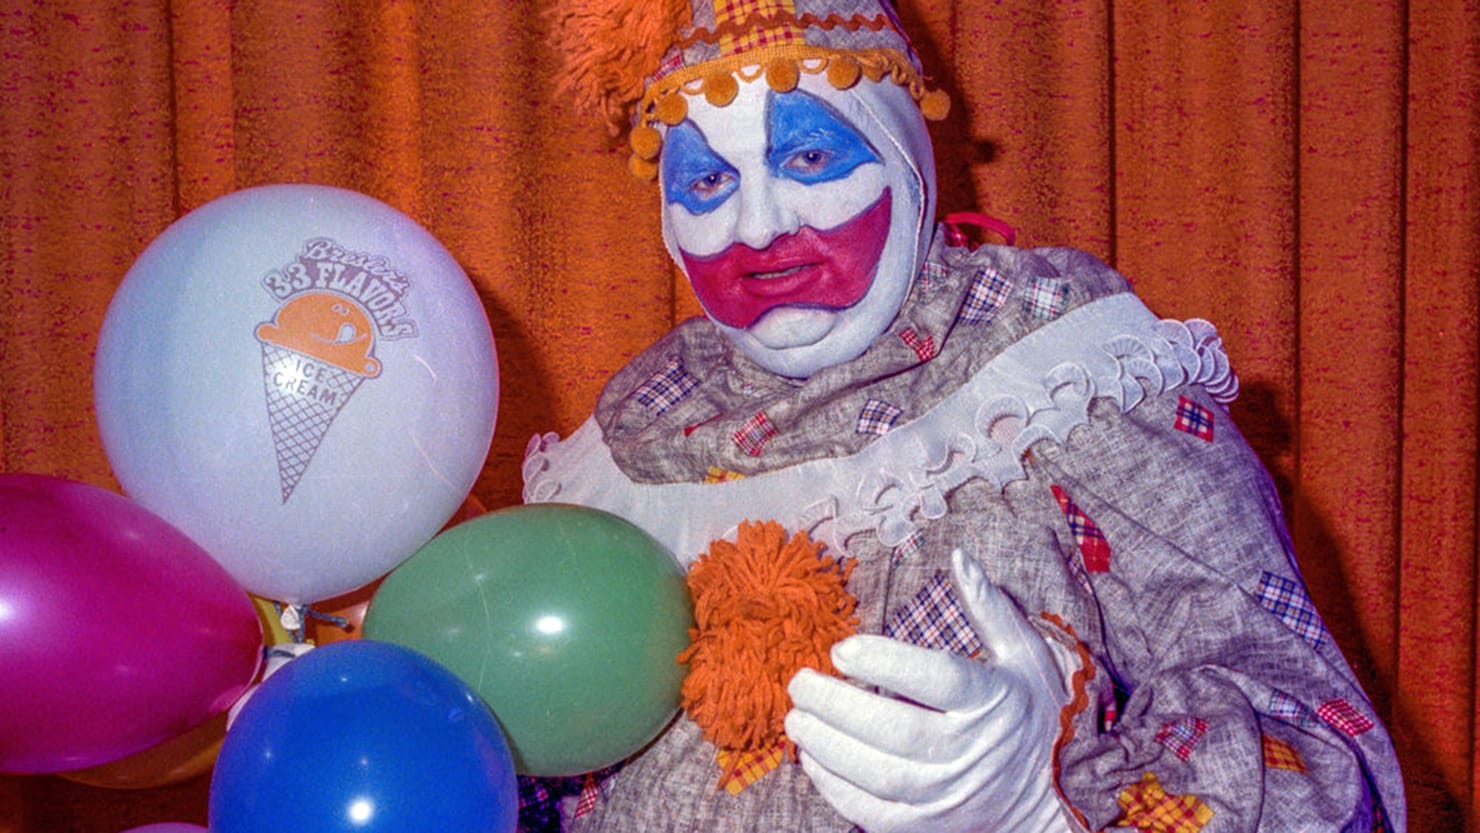 The real-life ‘killer clown’ who terrified America